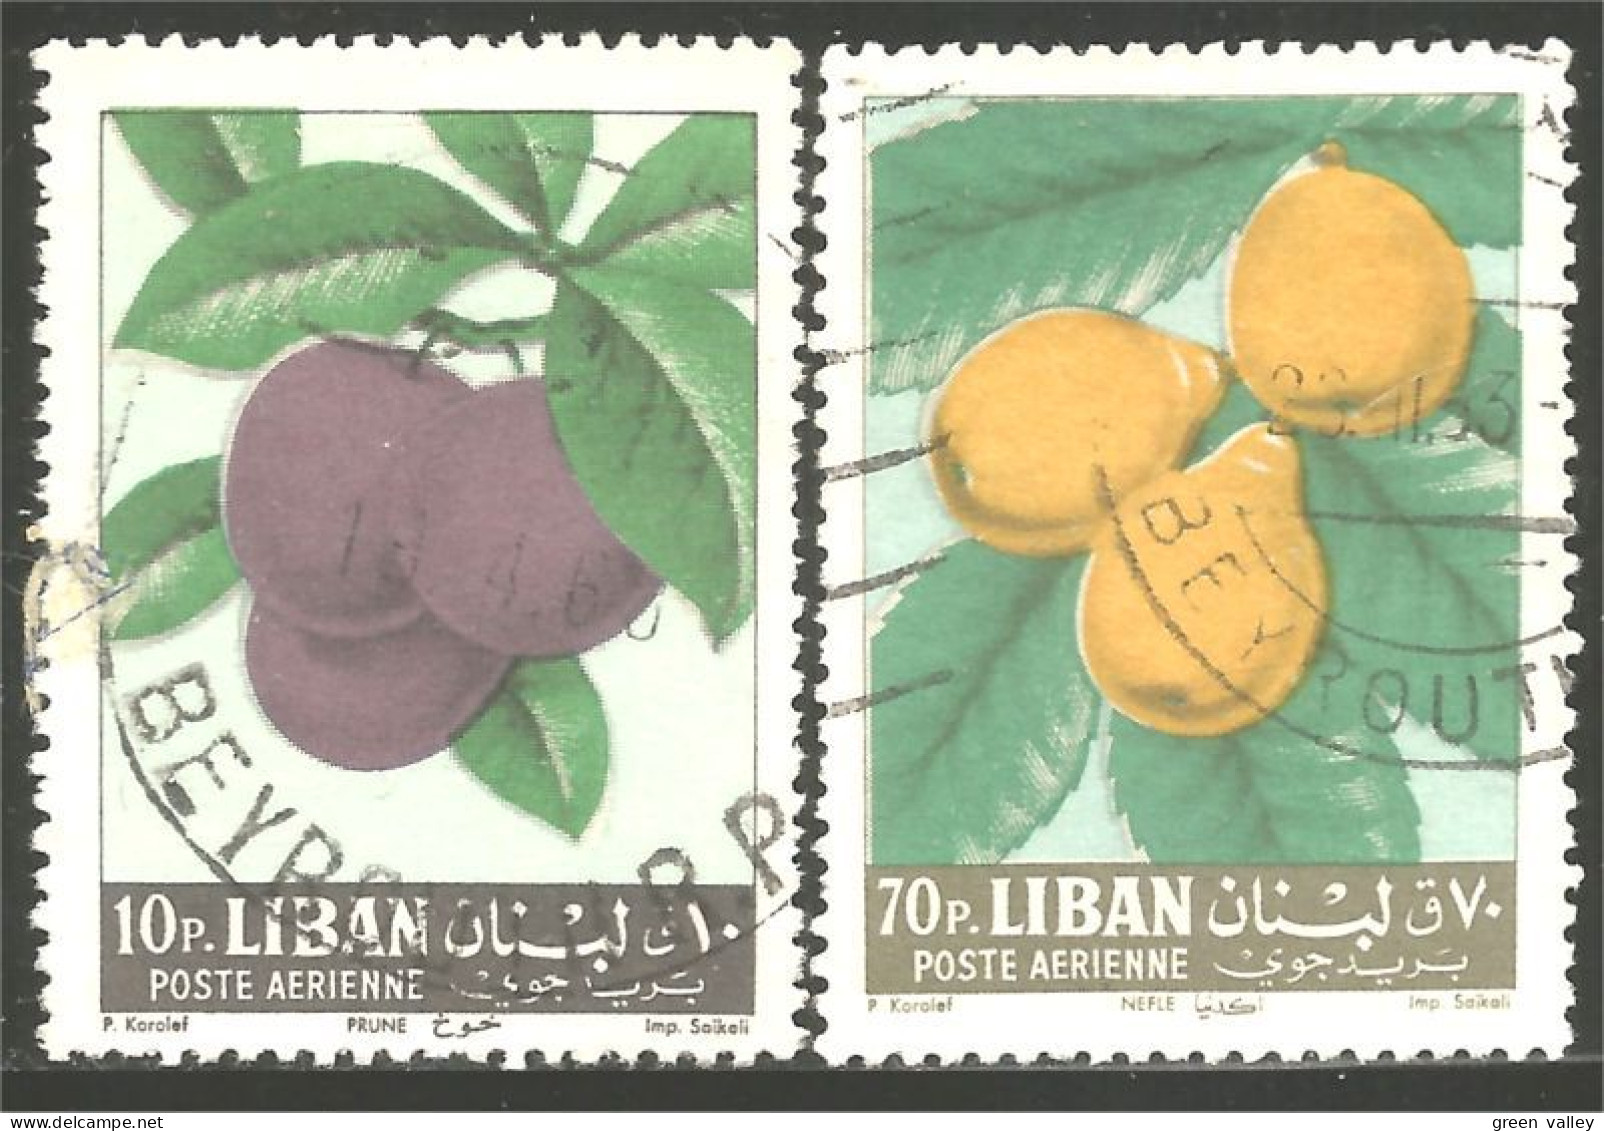 FR-24 Liban Fruits Prune Plum Nèfle Medlar Nespola Ameixa Prugna Pflaume - Obst & Früchte